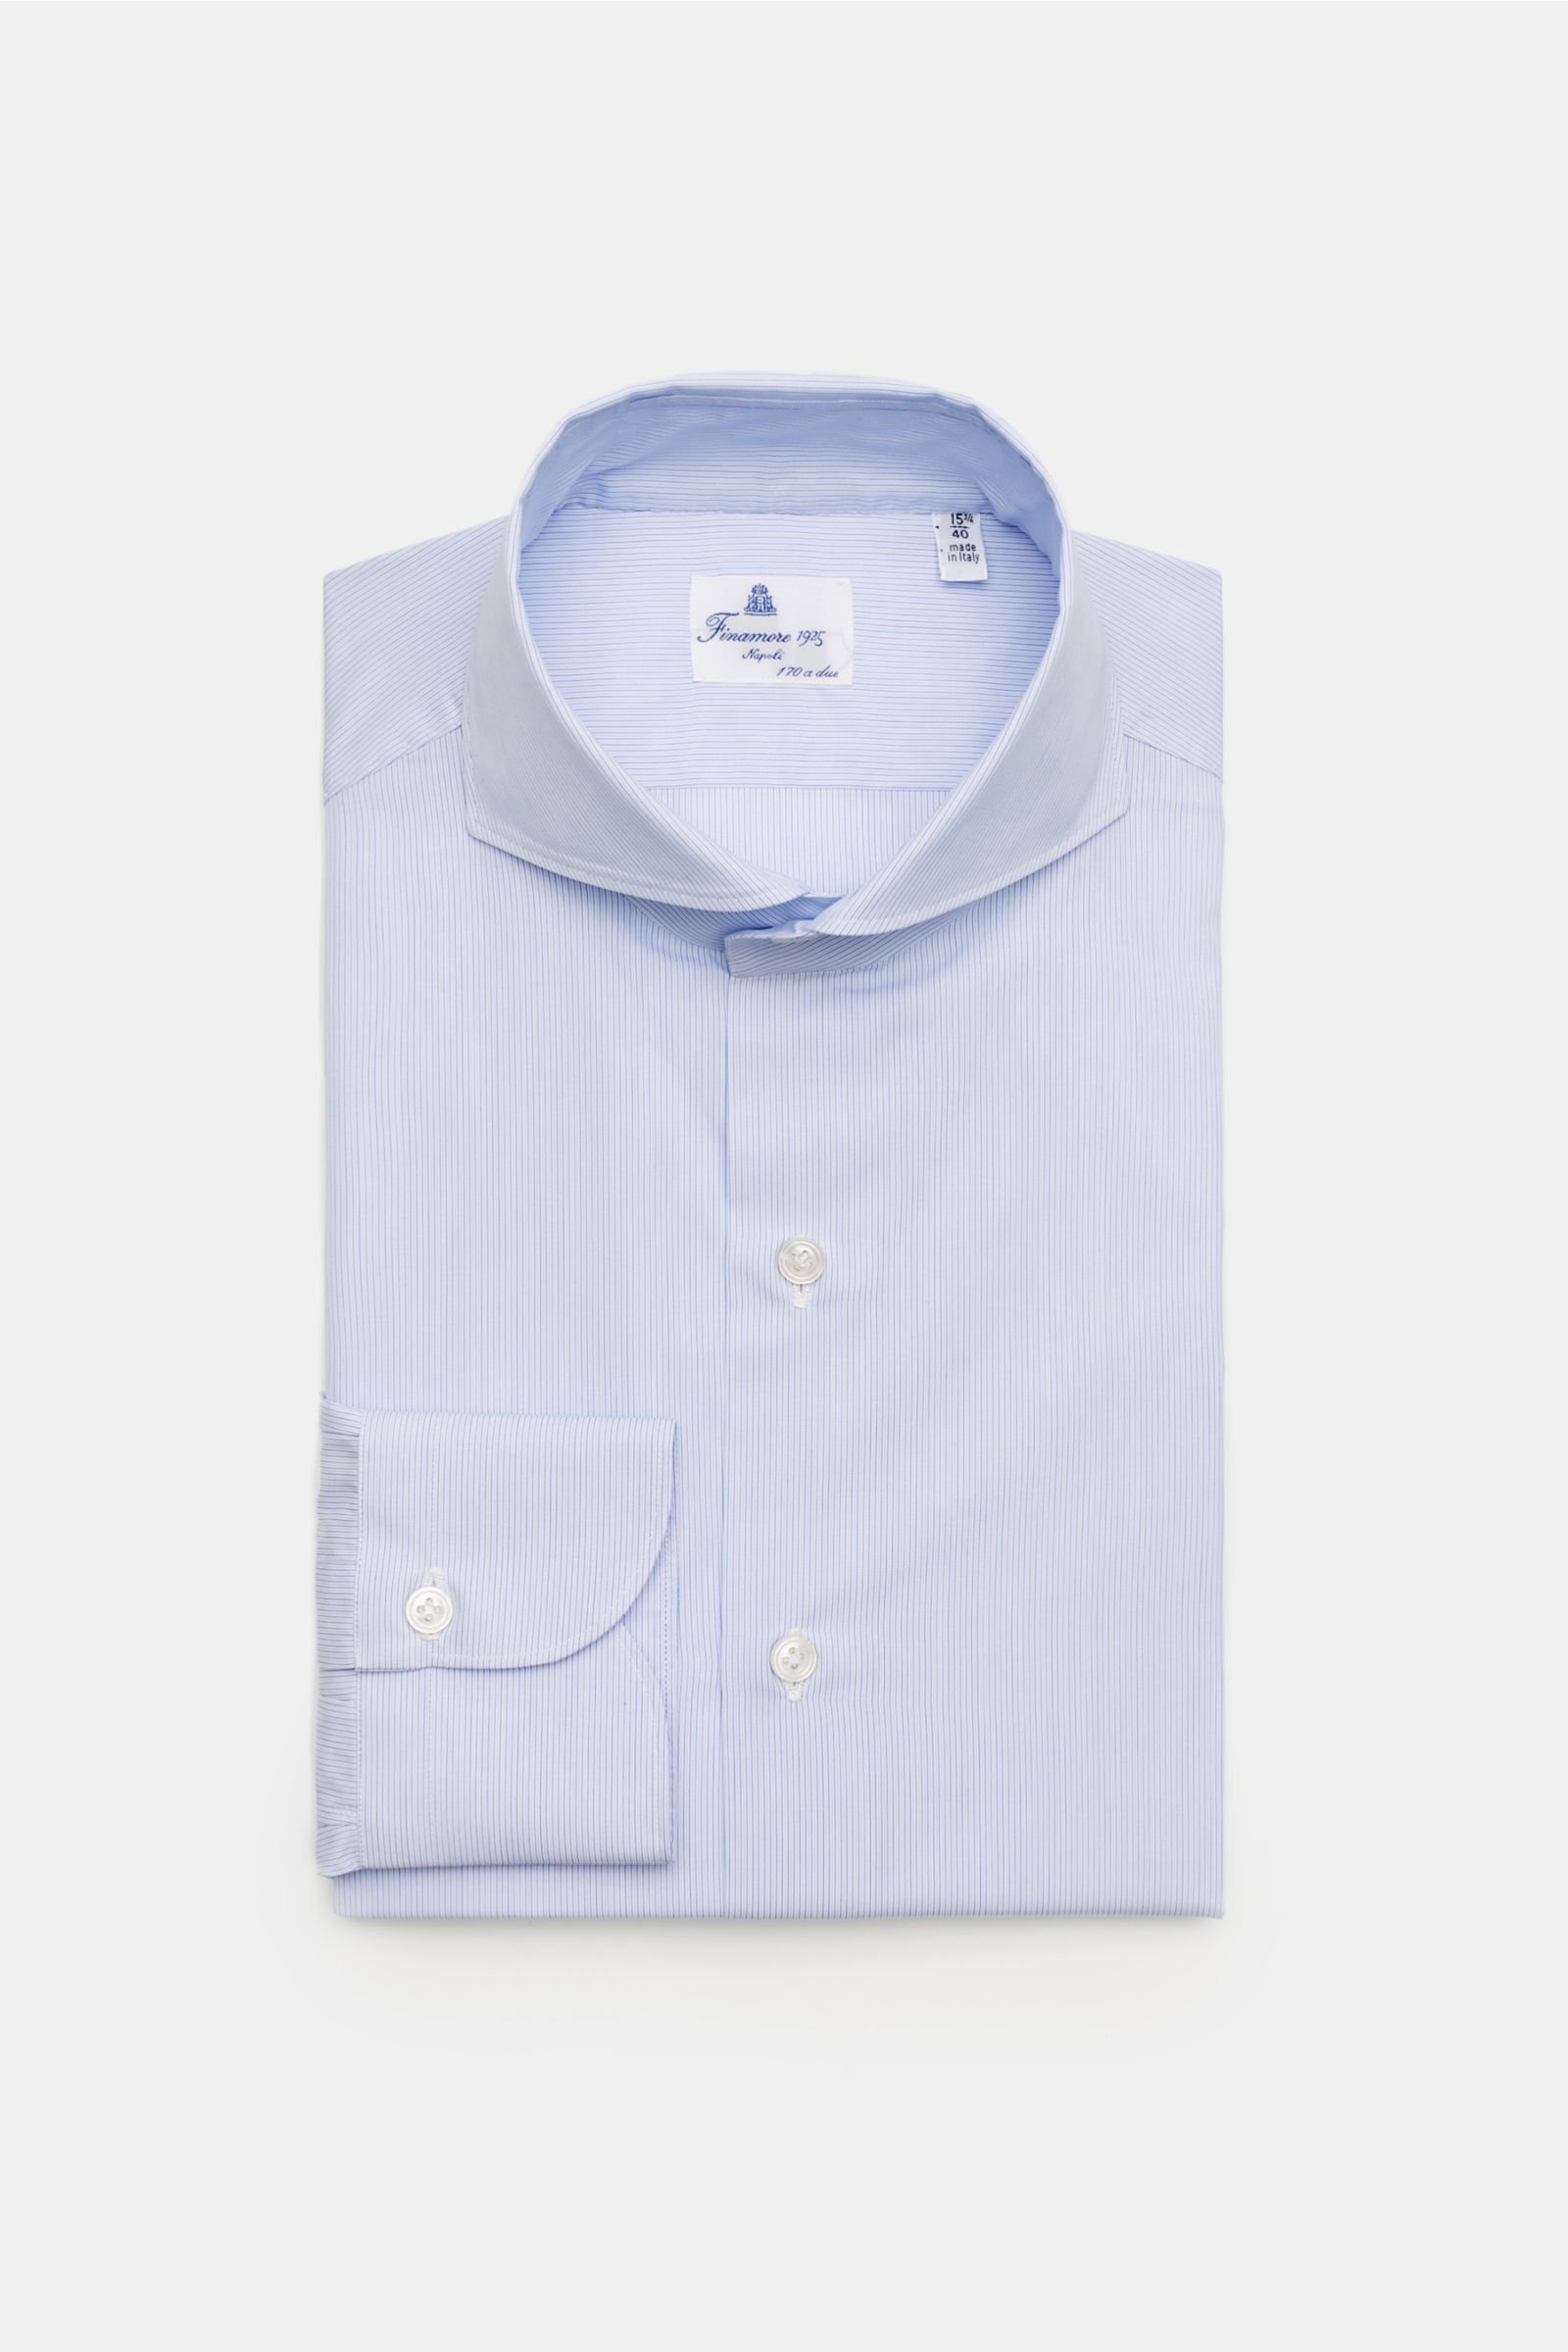 Business shirt 'Sergio Interno' shark collar pastel blue/navy striped